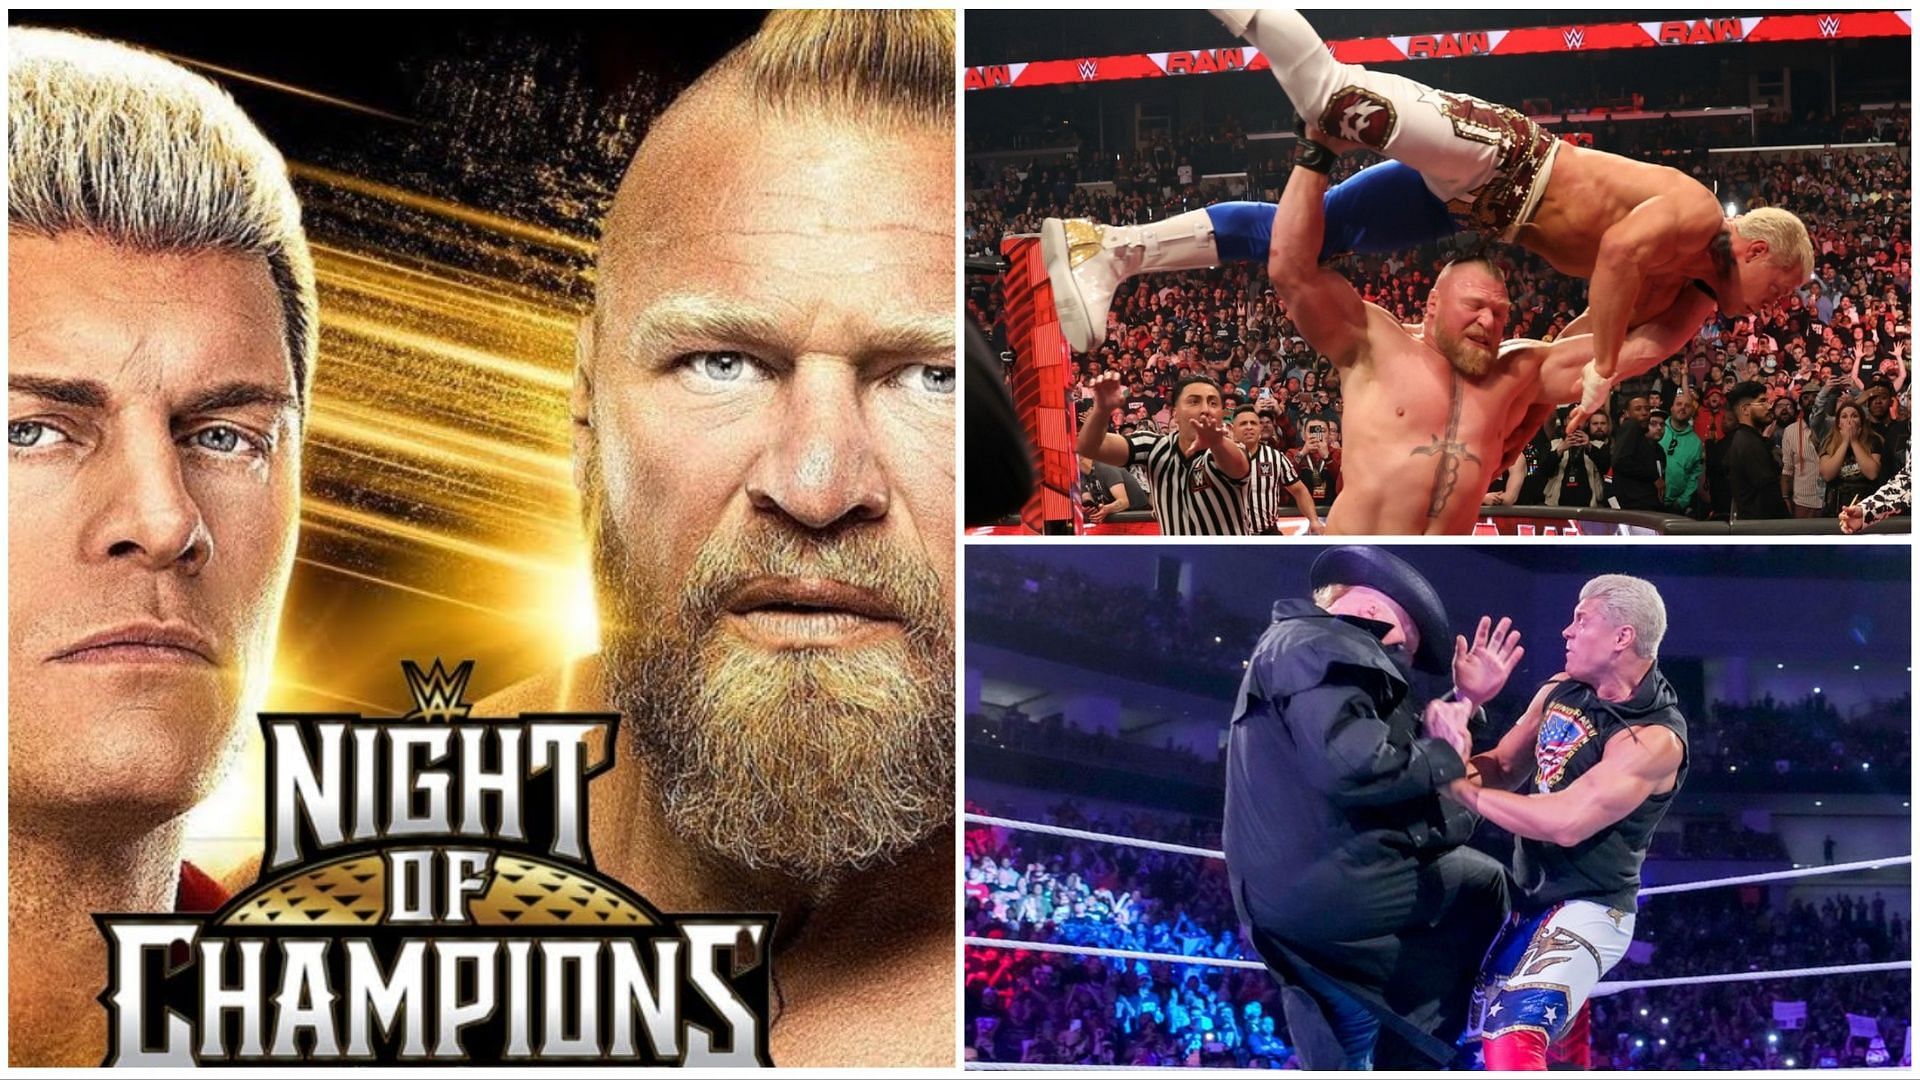 WWE Superstars Cody Rhodes and Brock Lesnar